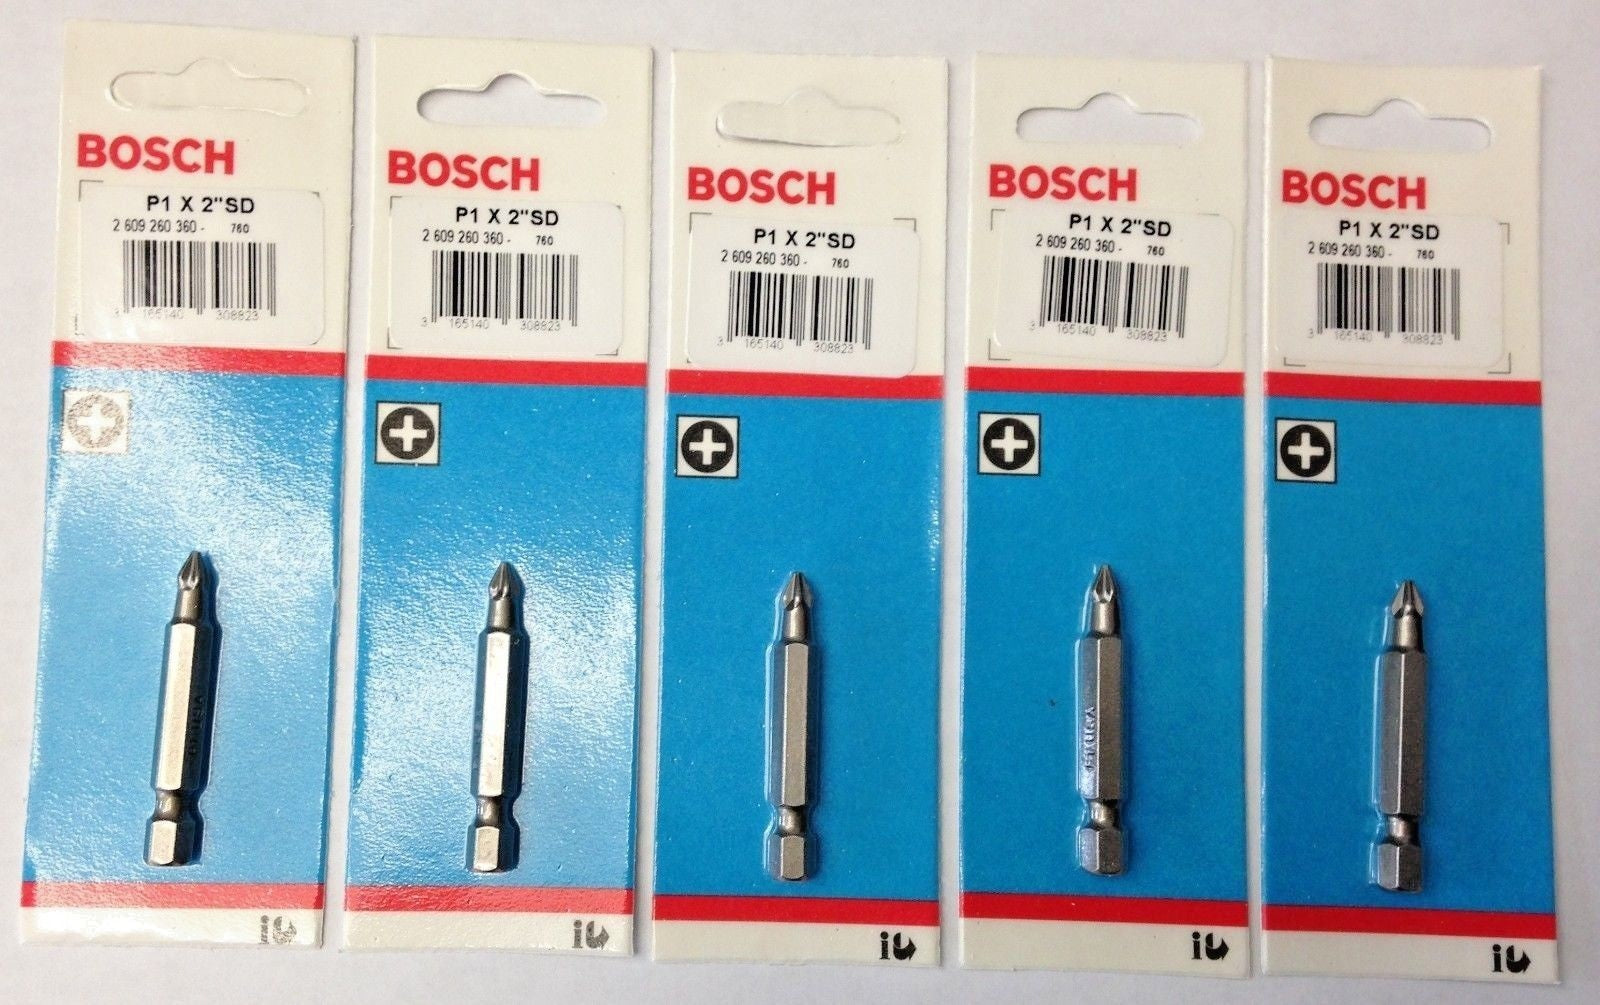 Bosch 2609260360 P1 x 2" Screwdriver Bits 5 Packs USA Made